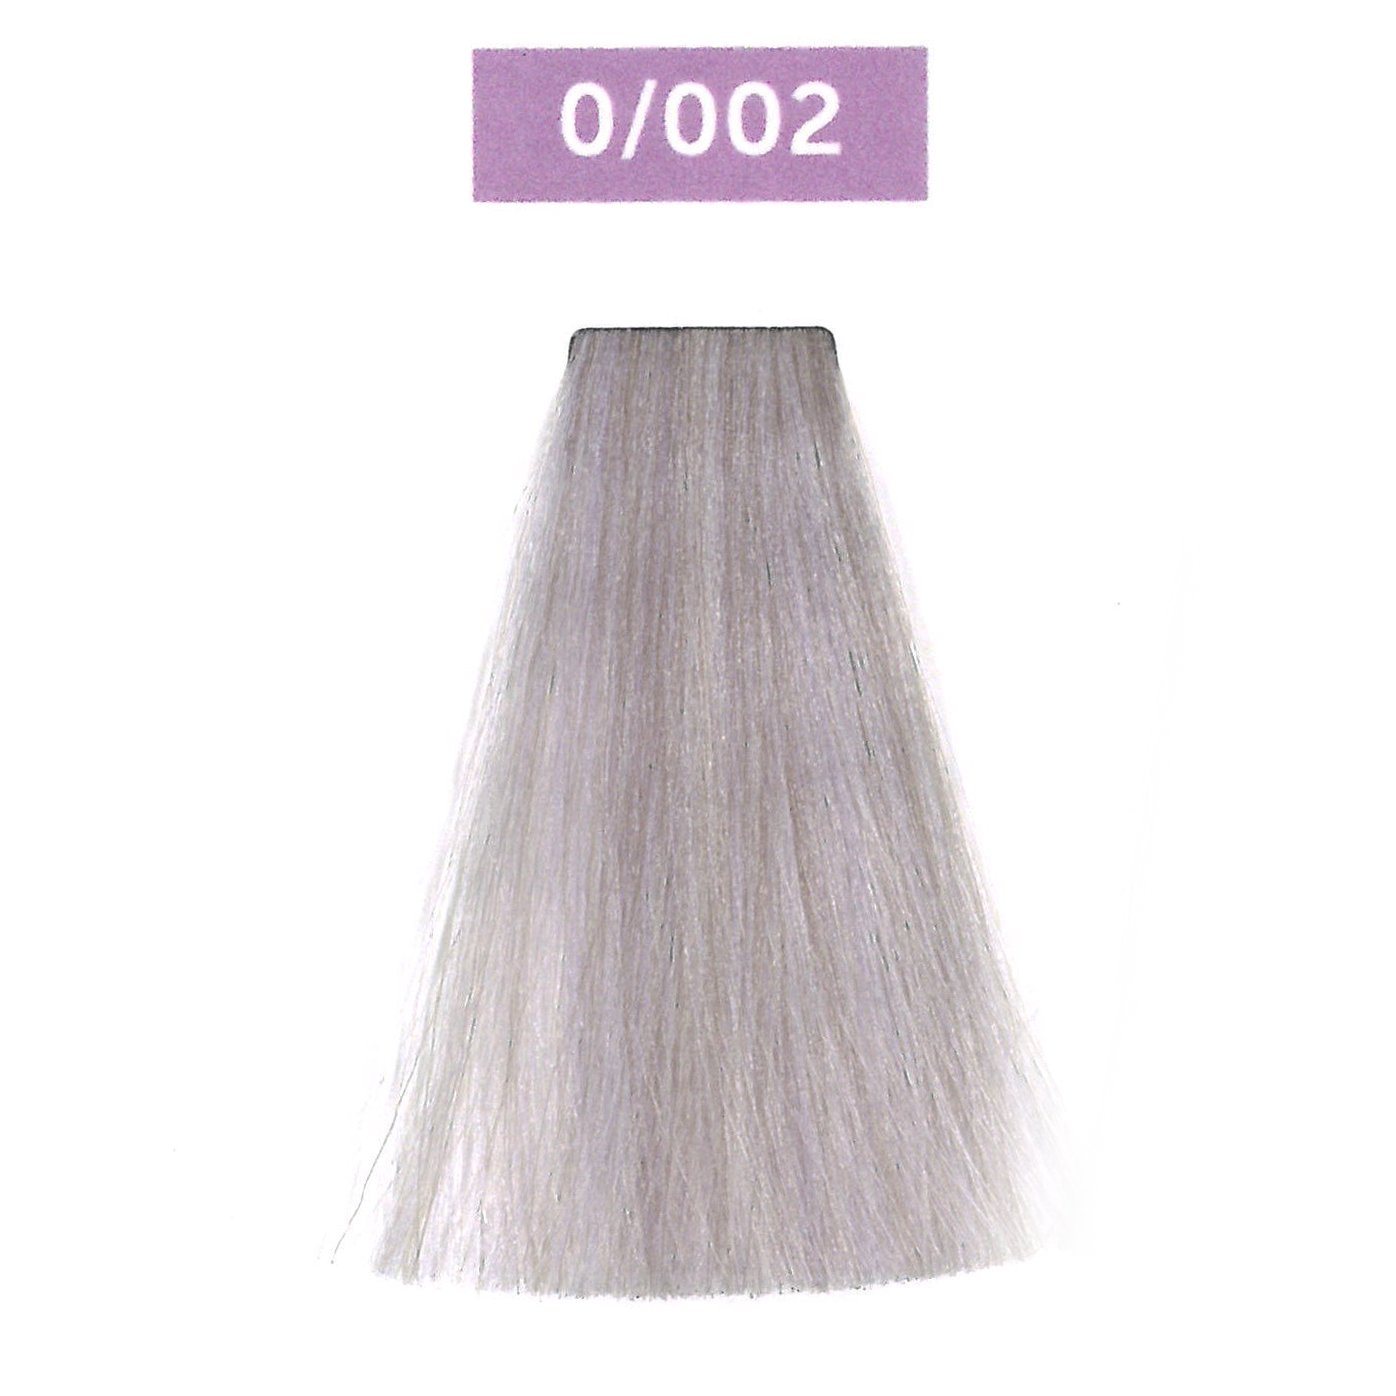 Blonde Toning | BLONDYE HAIR COLOR OYSTER 0/002 Pearl-Ash 